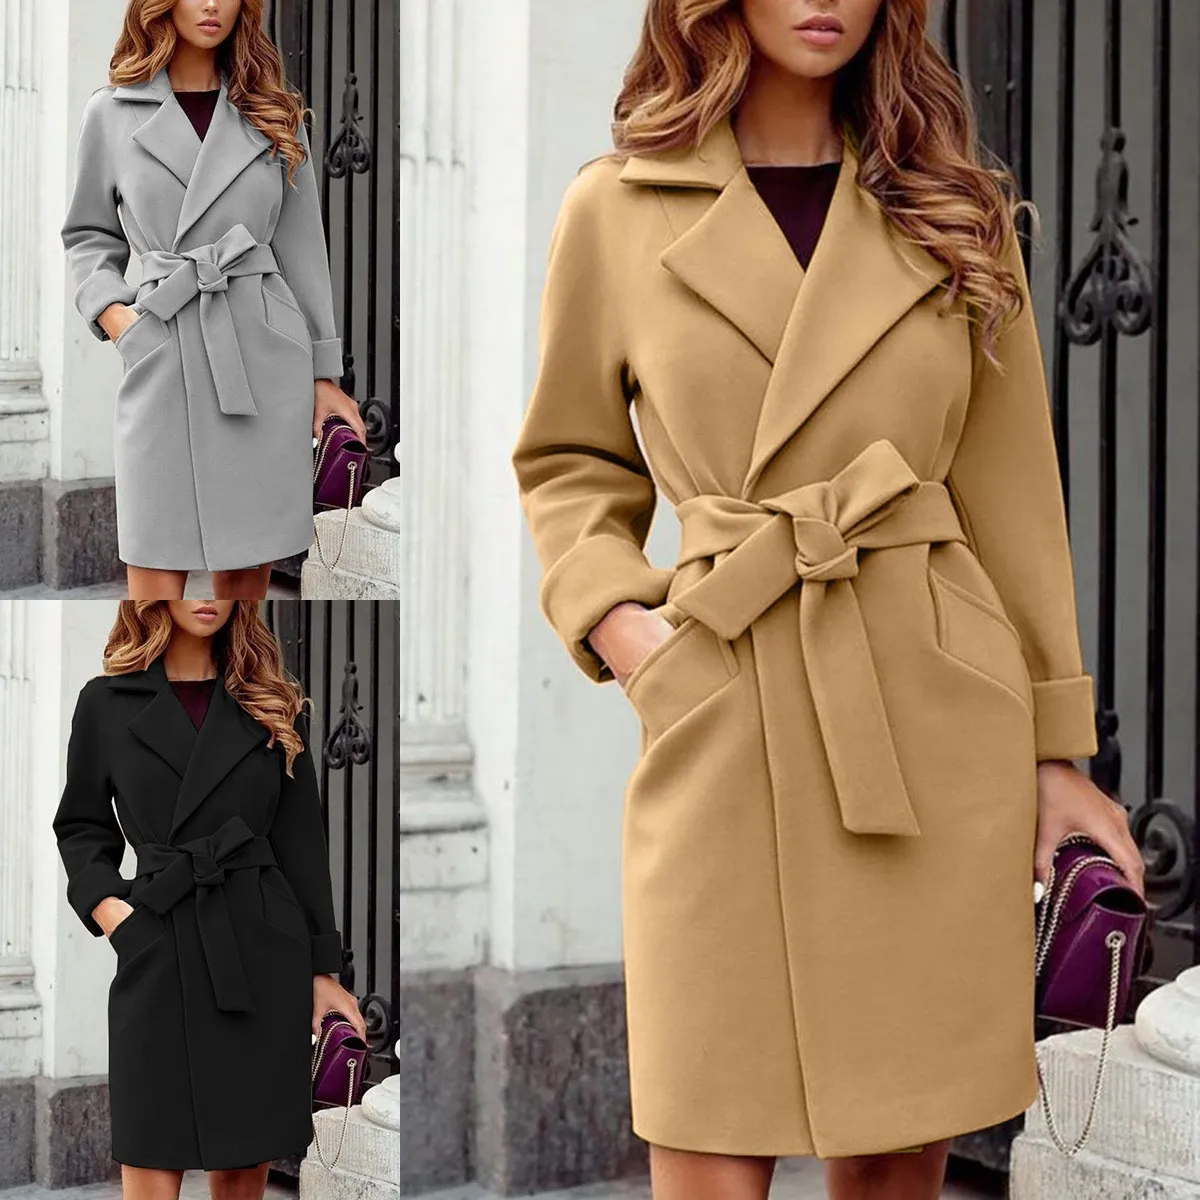 Homenesgenics Outdoor Jackets Winter Coats for Women Plus Size